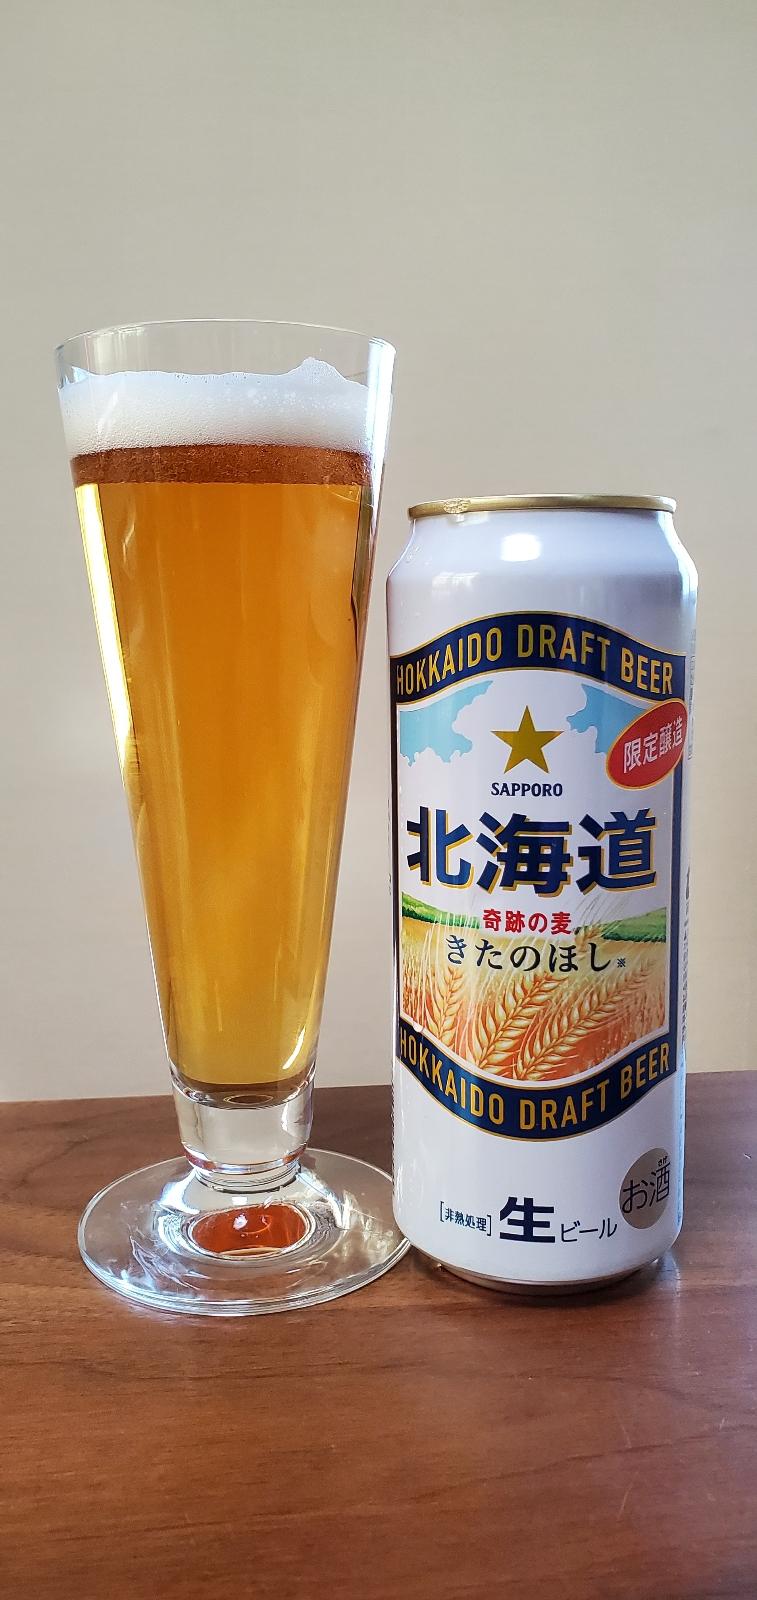 Hokkaido Draft Beer (2020)